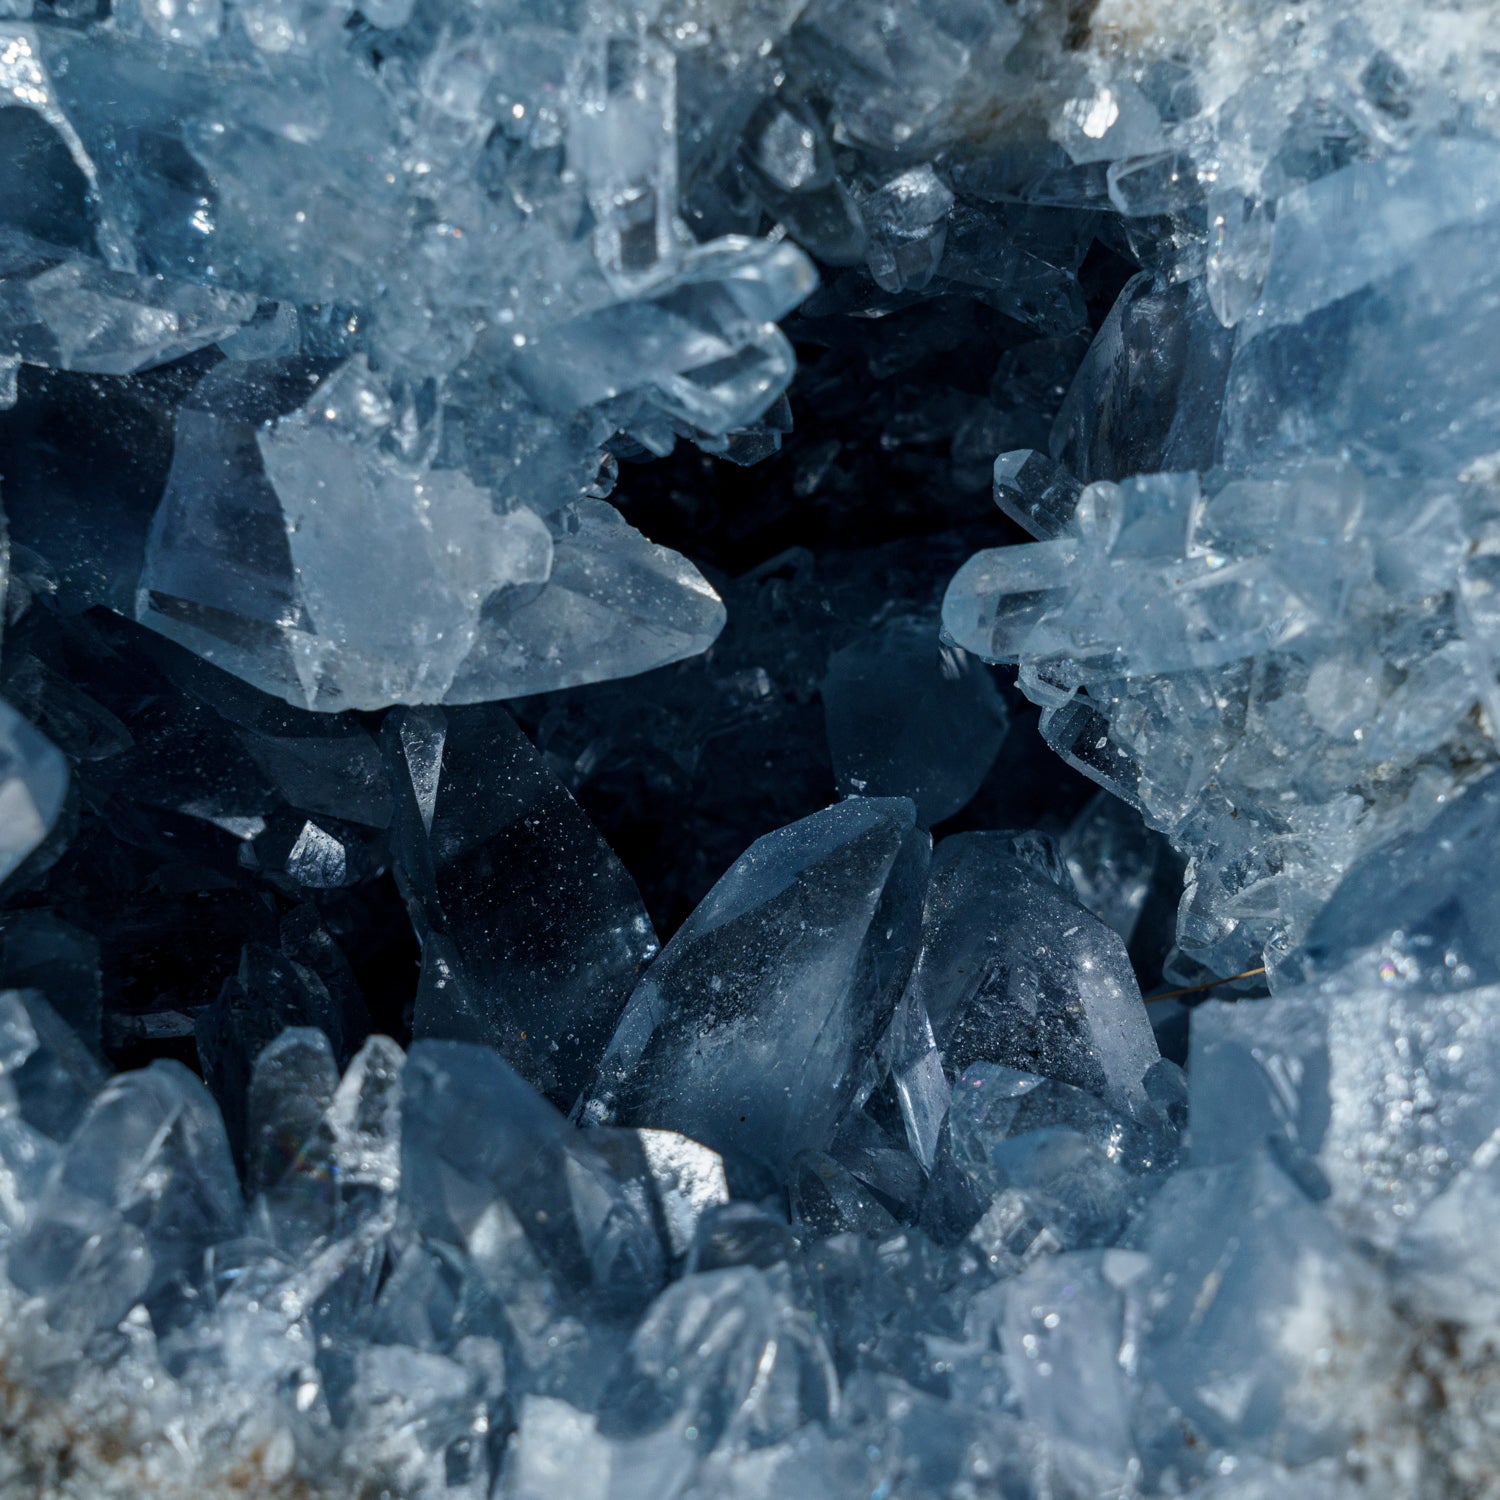 Blue Celestite Cluster Geode From Sankoany, Ketsepy Mahajanga, Madagascar (12 lbs)